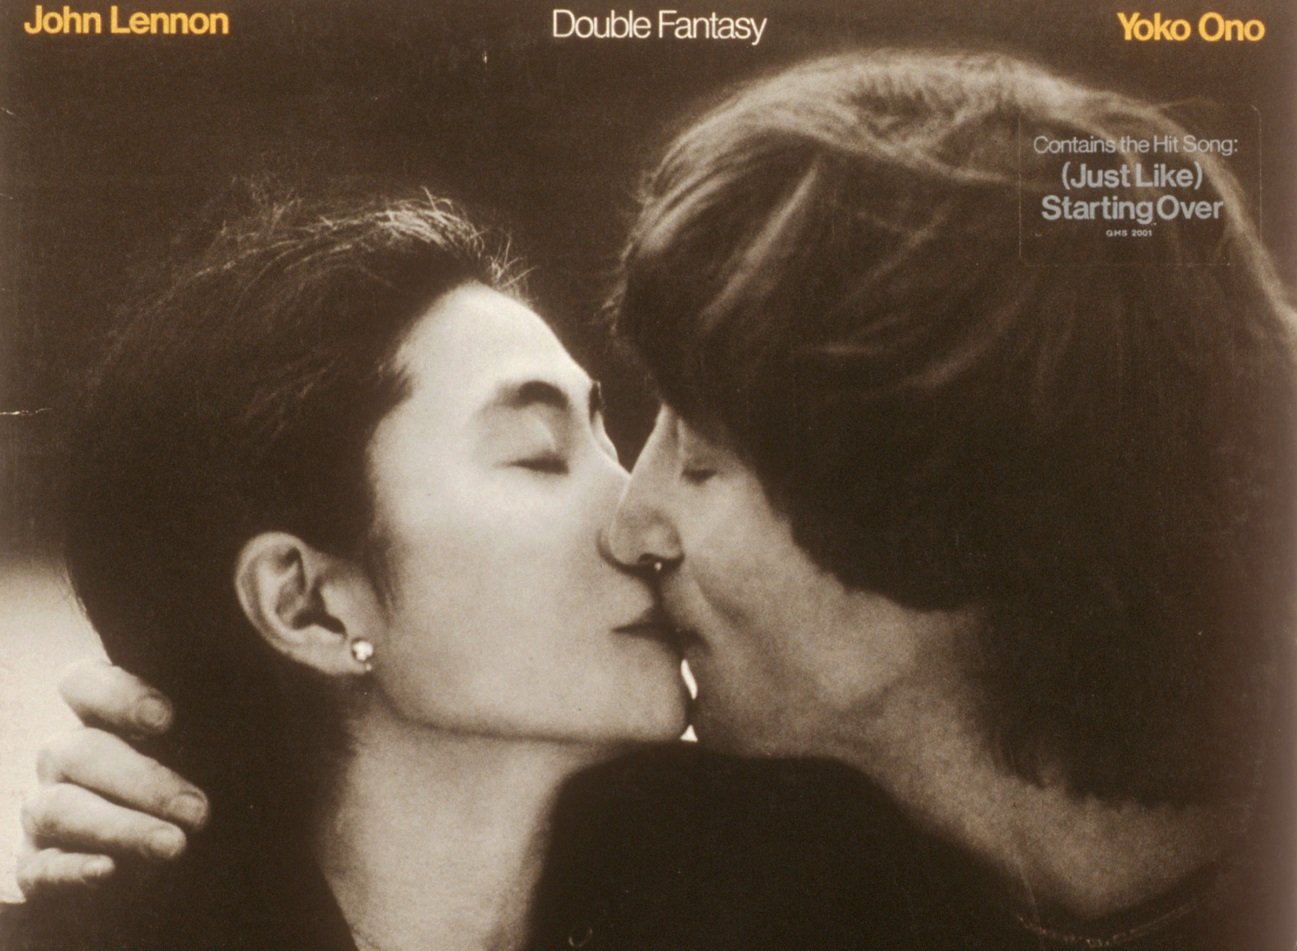 'Double Fantasy' album cover with Yoko Ono and John Lennon kissing